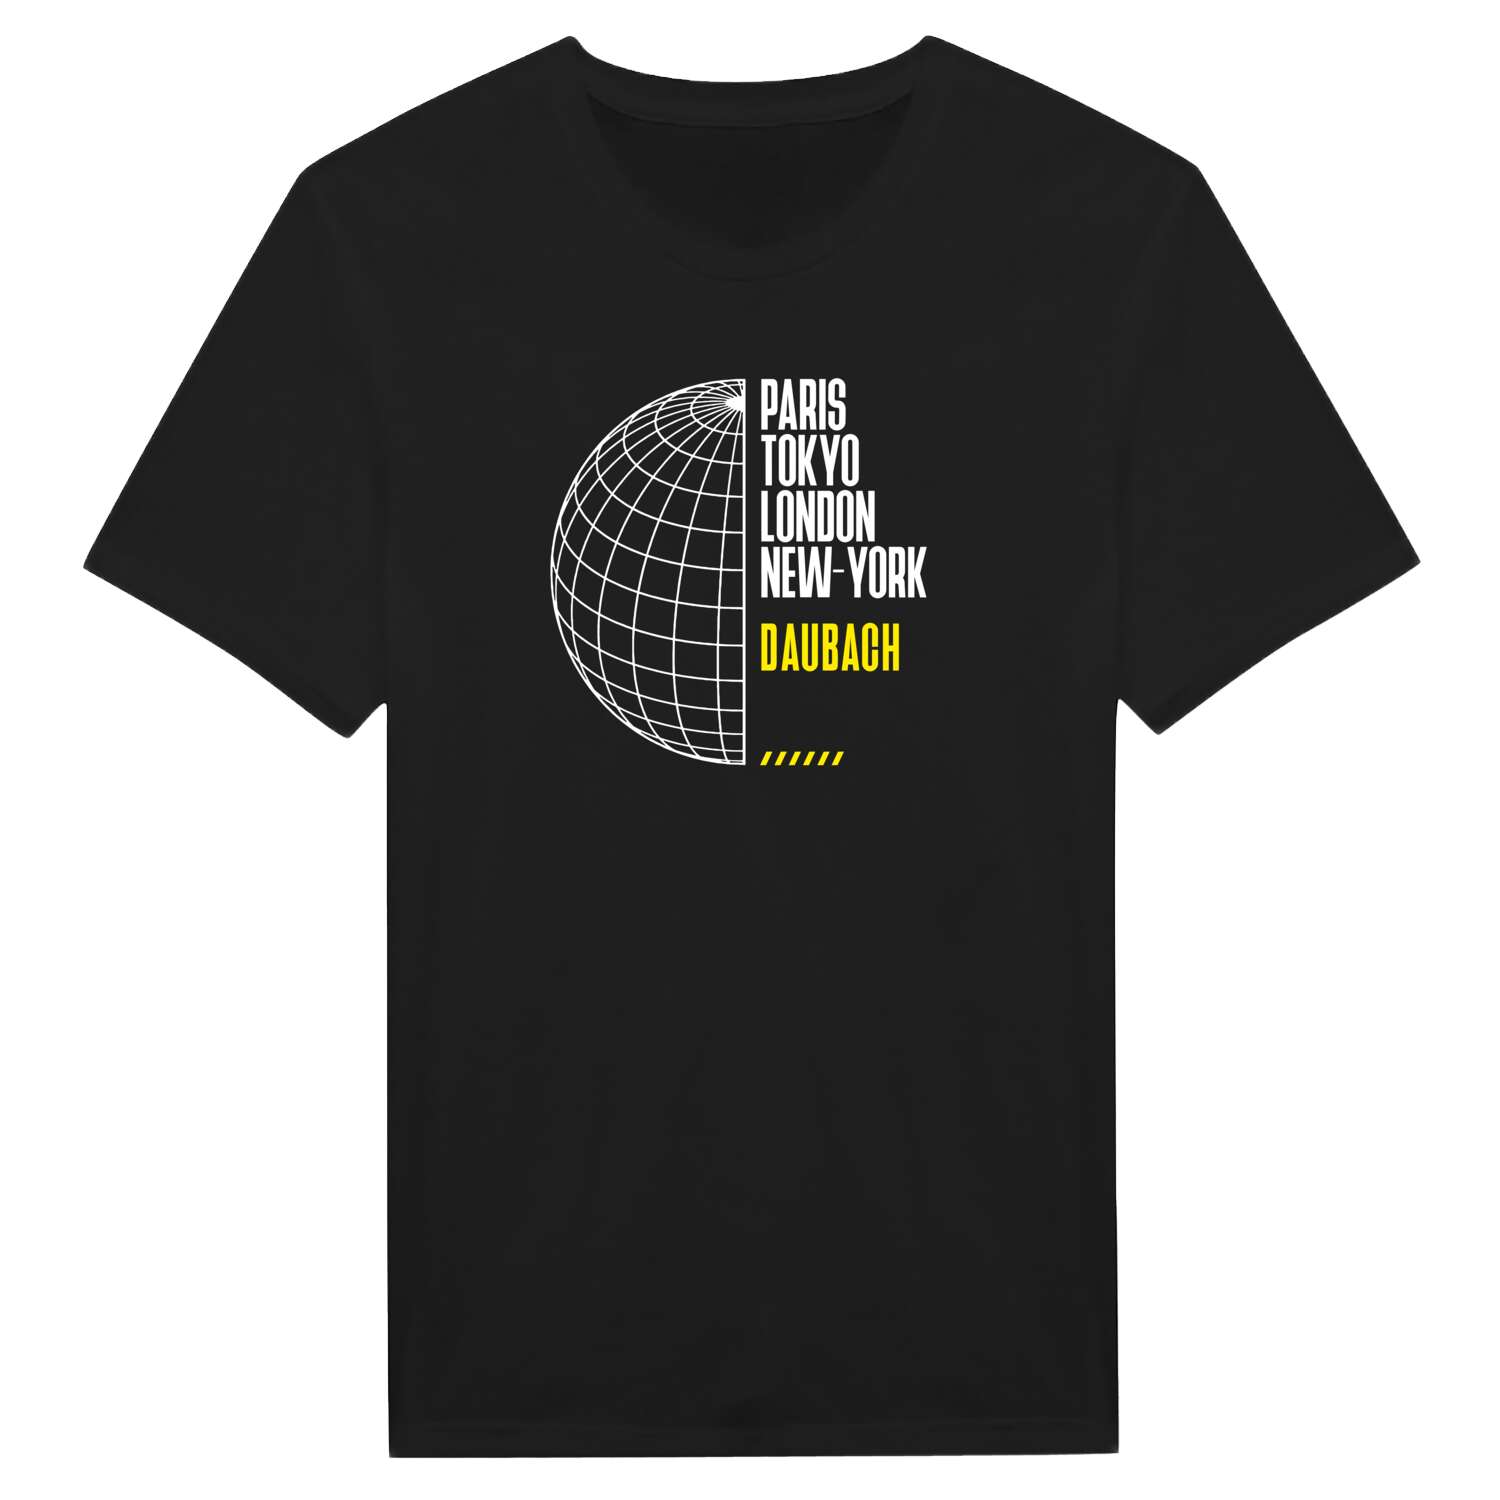 Daubach T-Shirt »Paris Tokyo London«